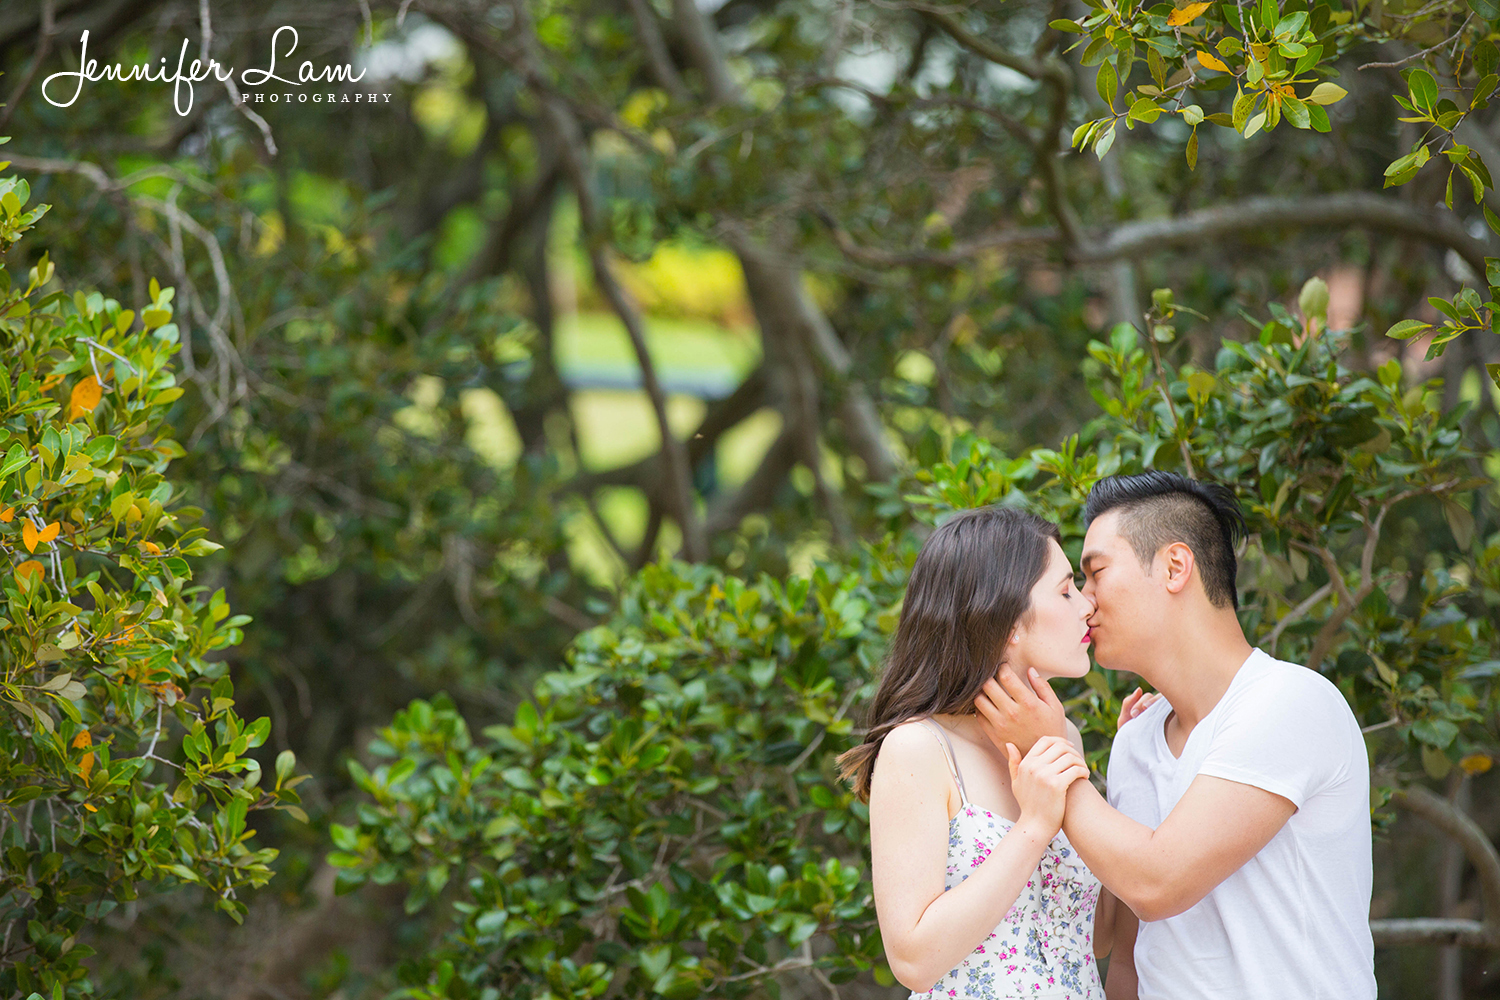 Sydney Pre-Wedding Photography - Jennifer Lam Photography (21).jpg